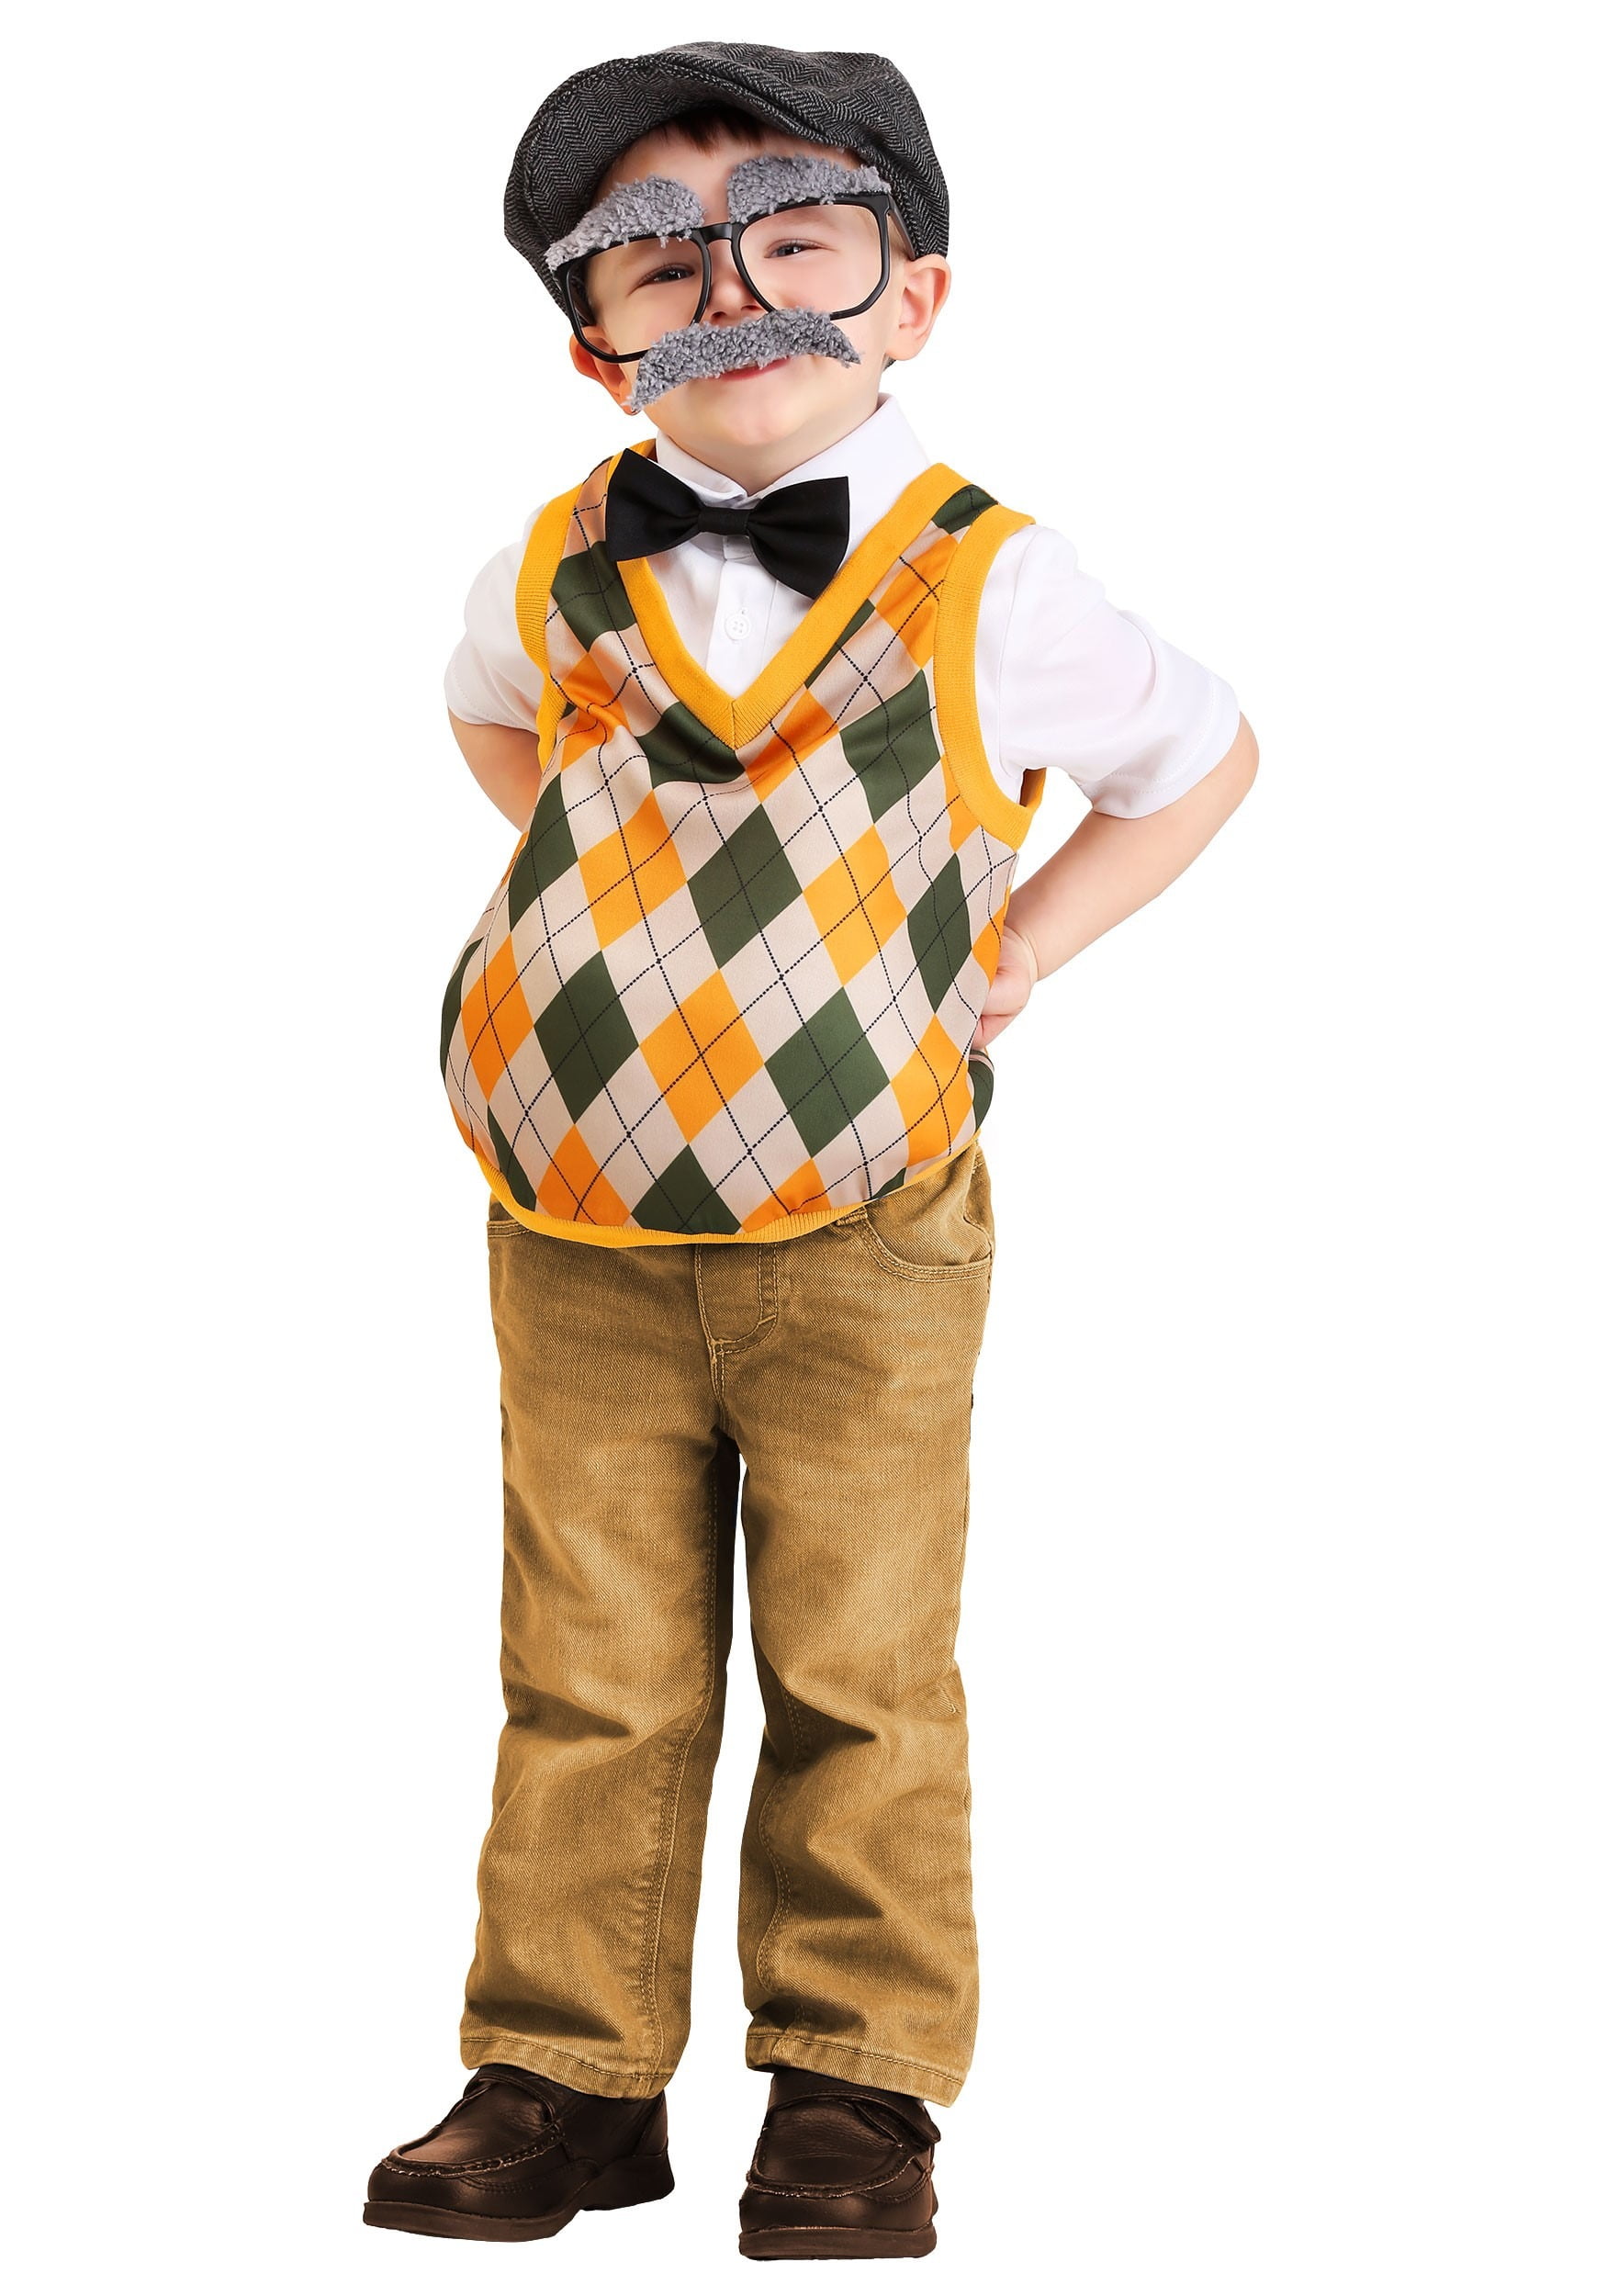 Toddler's Old Man Costume - Walmart.com